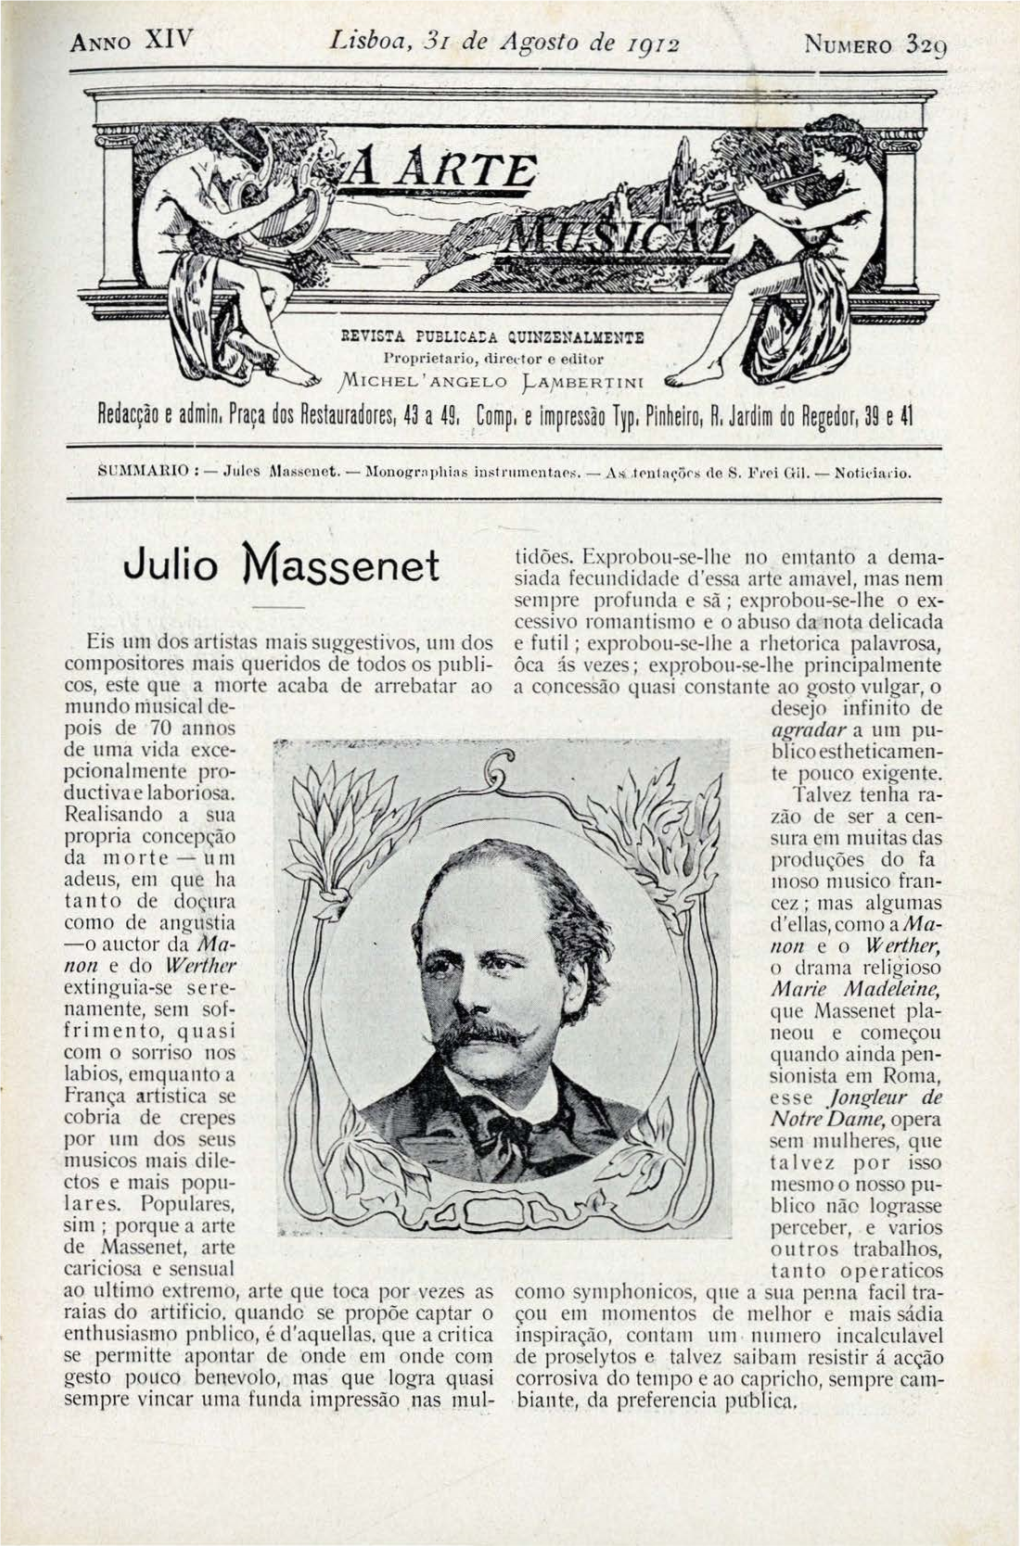 Julio Massenet